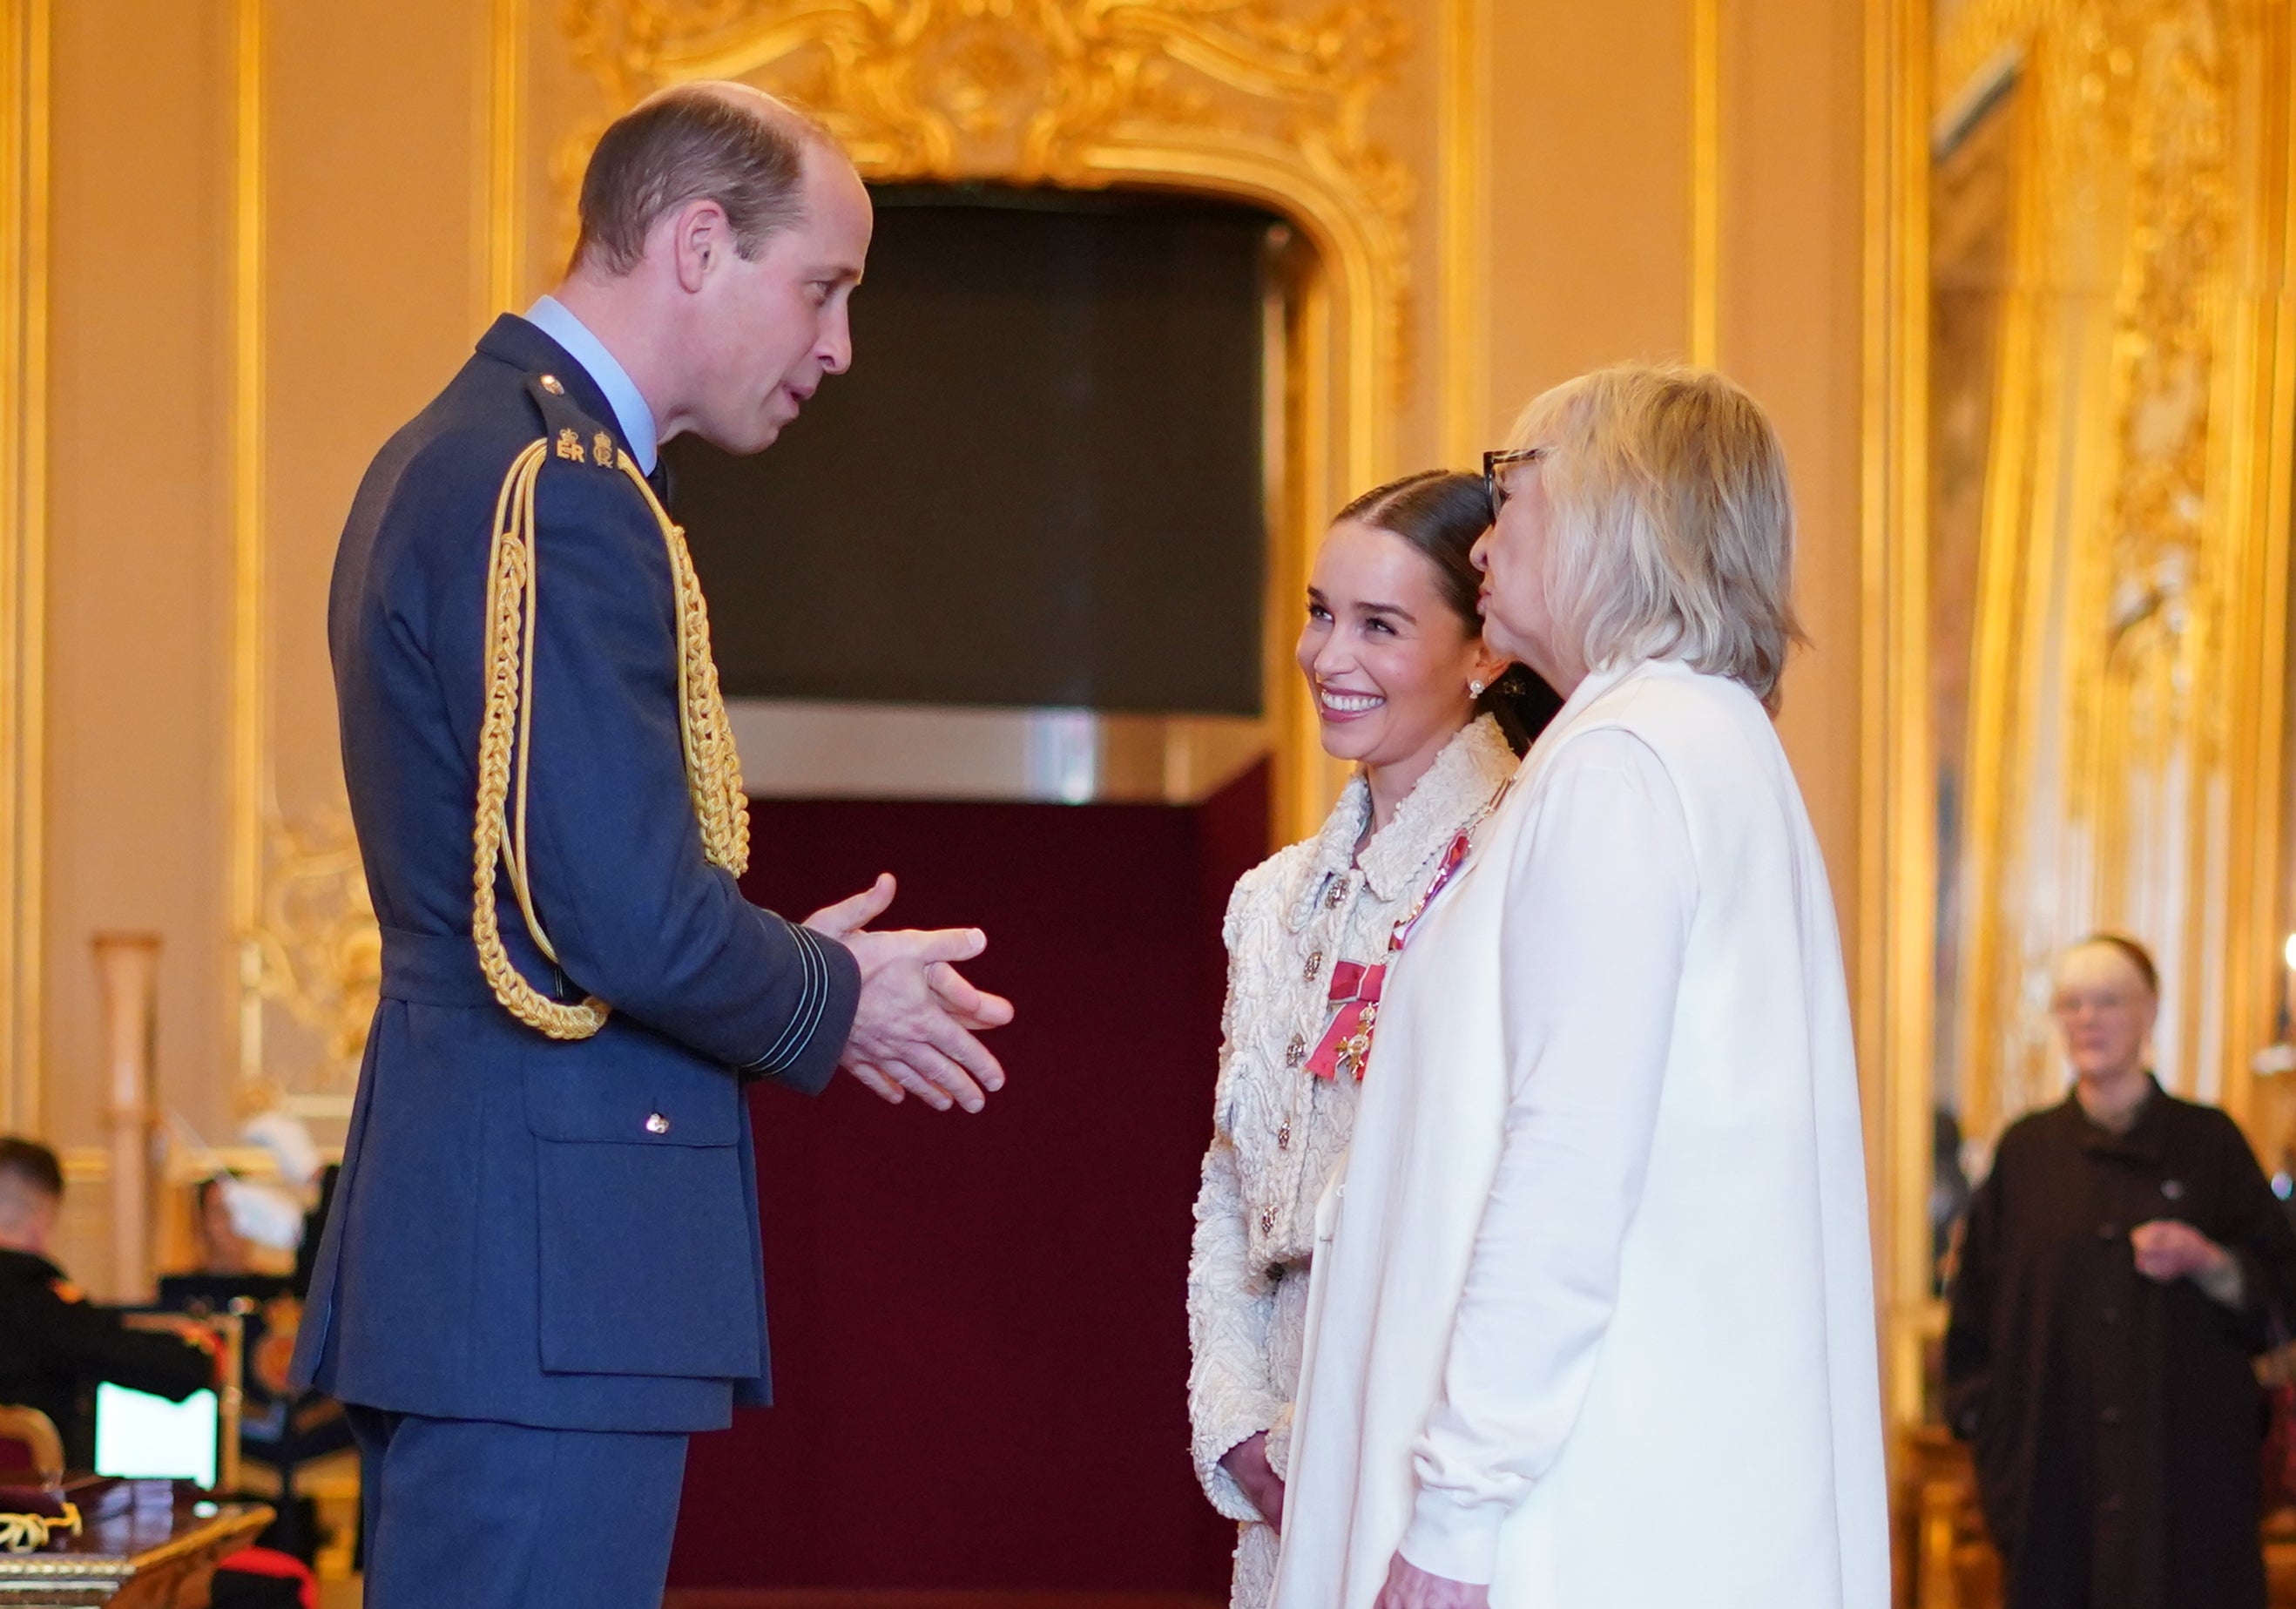 The Prince of Wales honoured Jennifer Clarke and Emilia Clarke